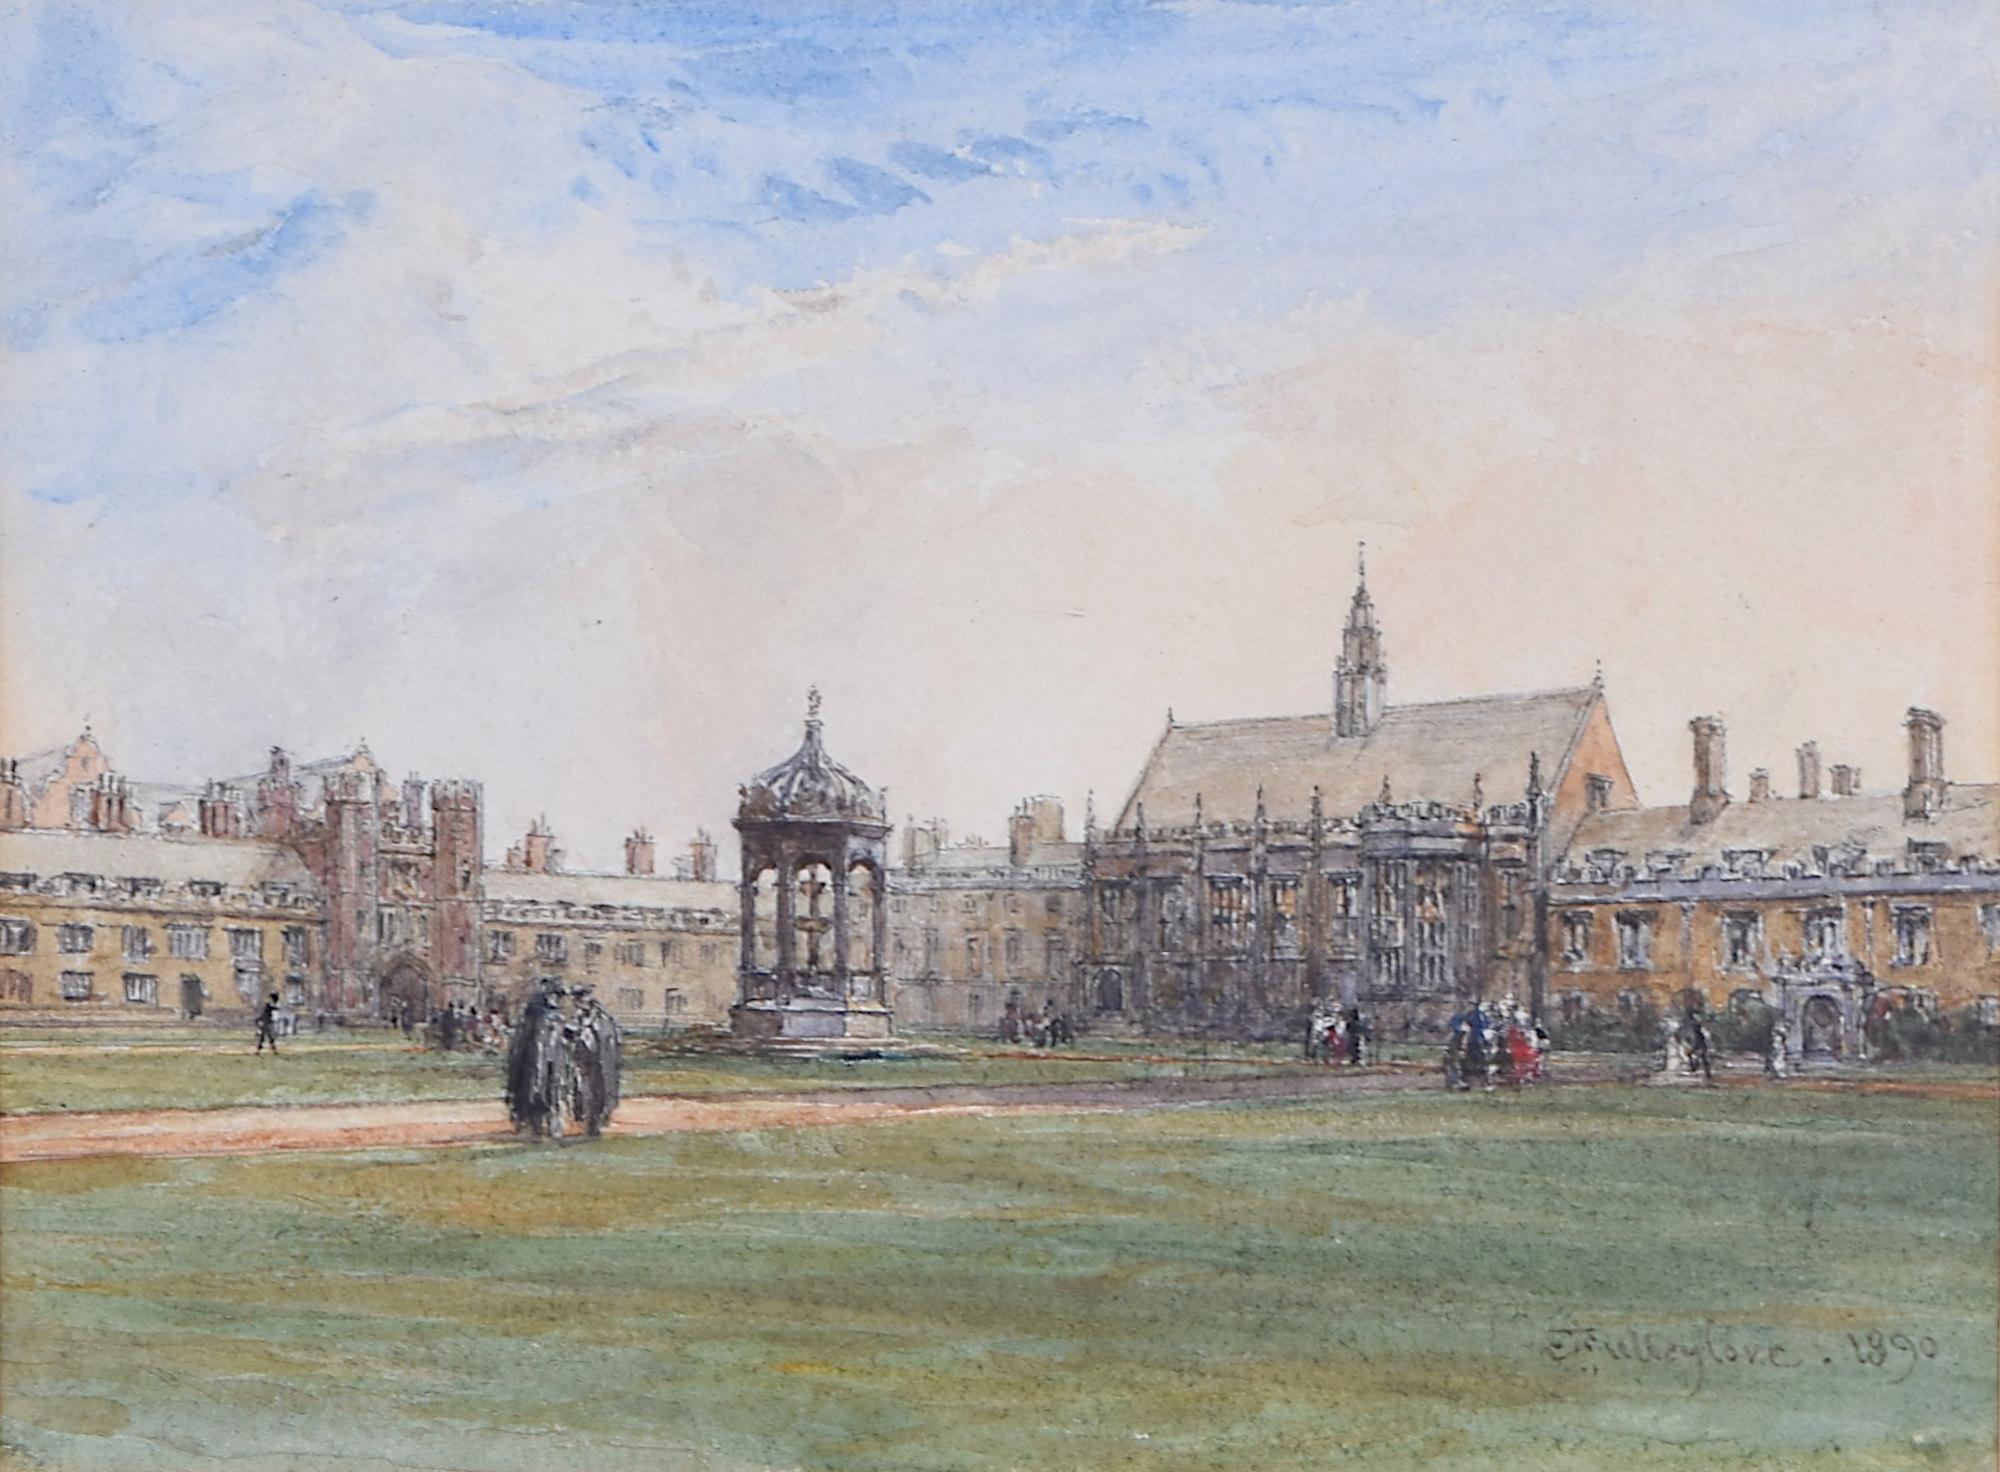 John Fulleylove Trinity College Great Court, Cambridge 1890 watercolour